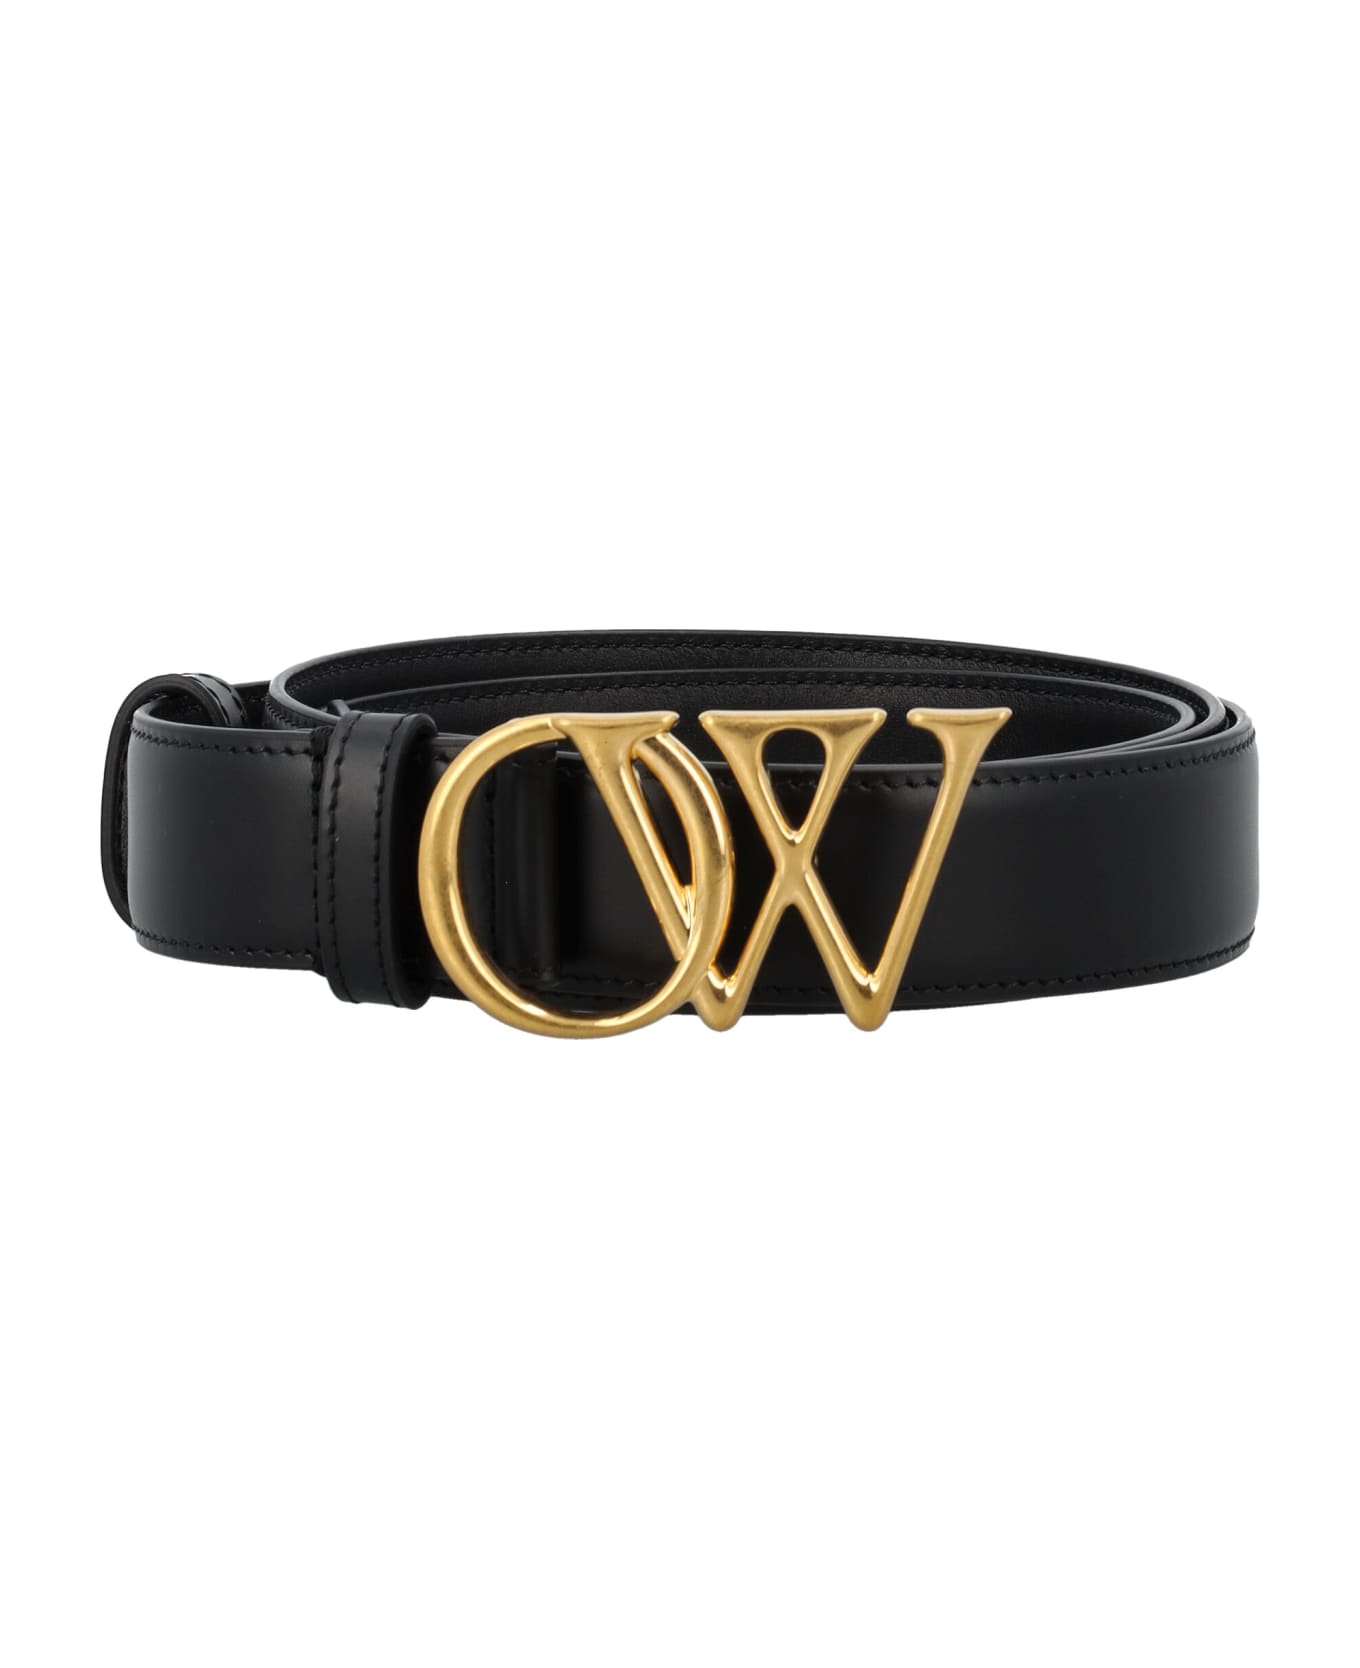 Off-White Ow Initials Belt - BLACK/GOLD